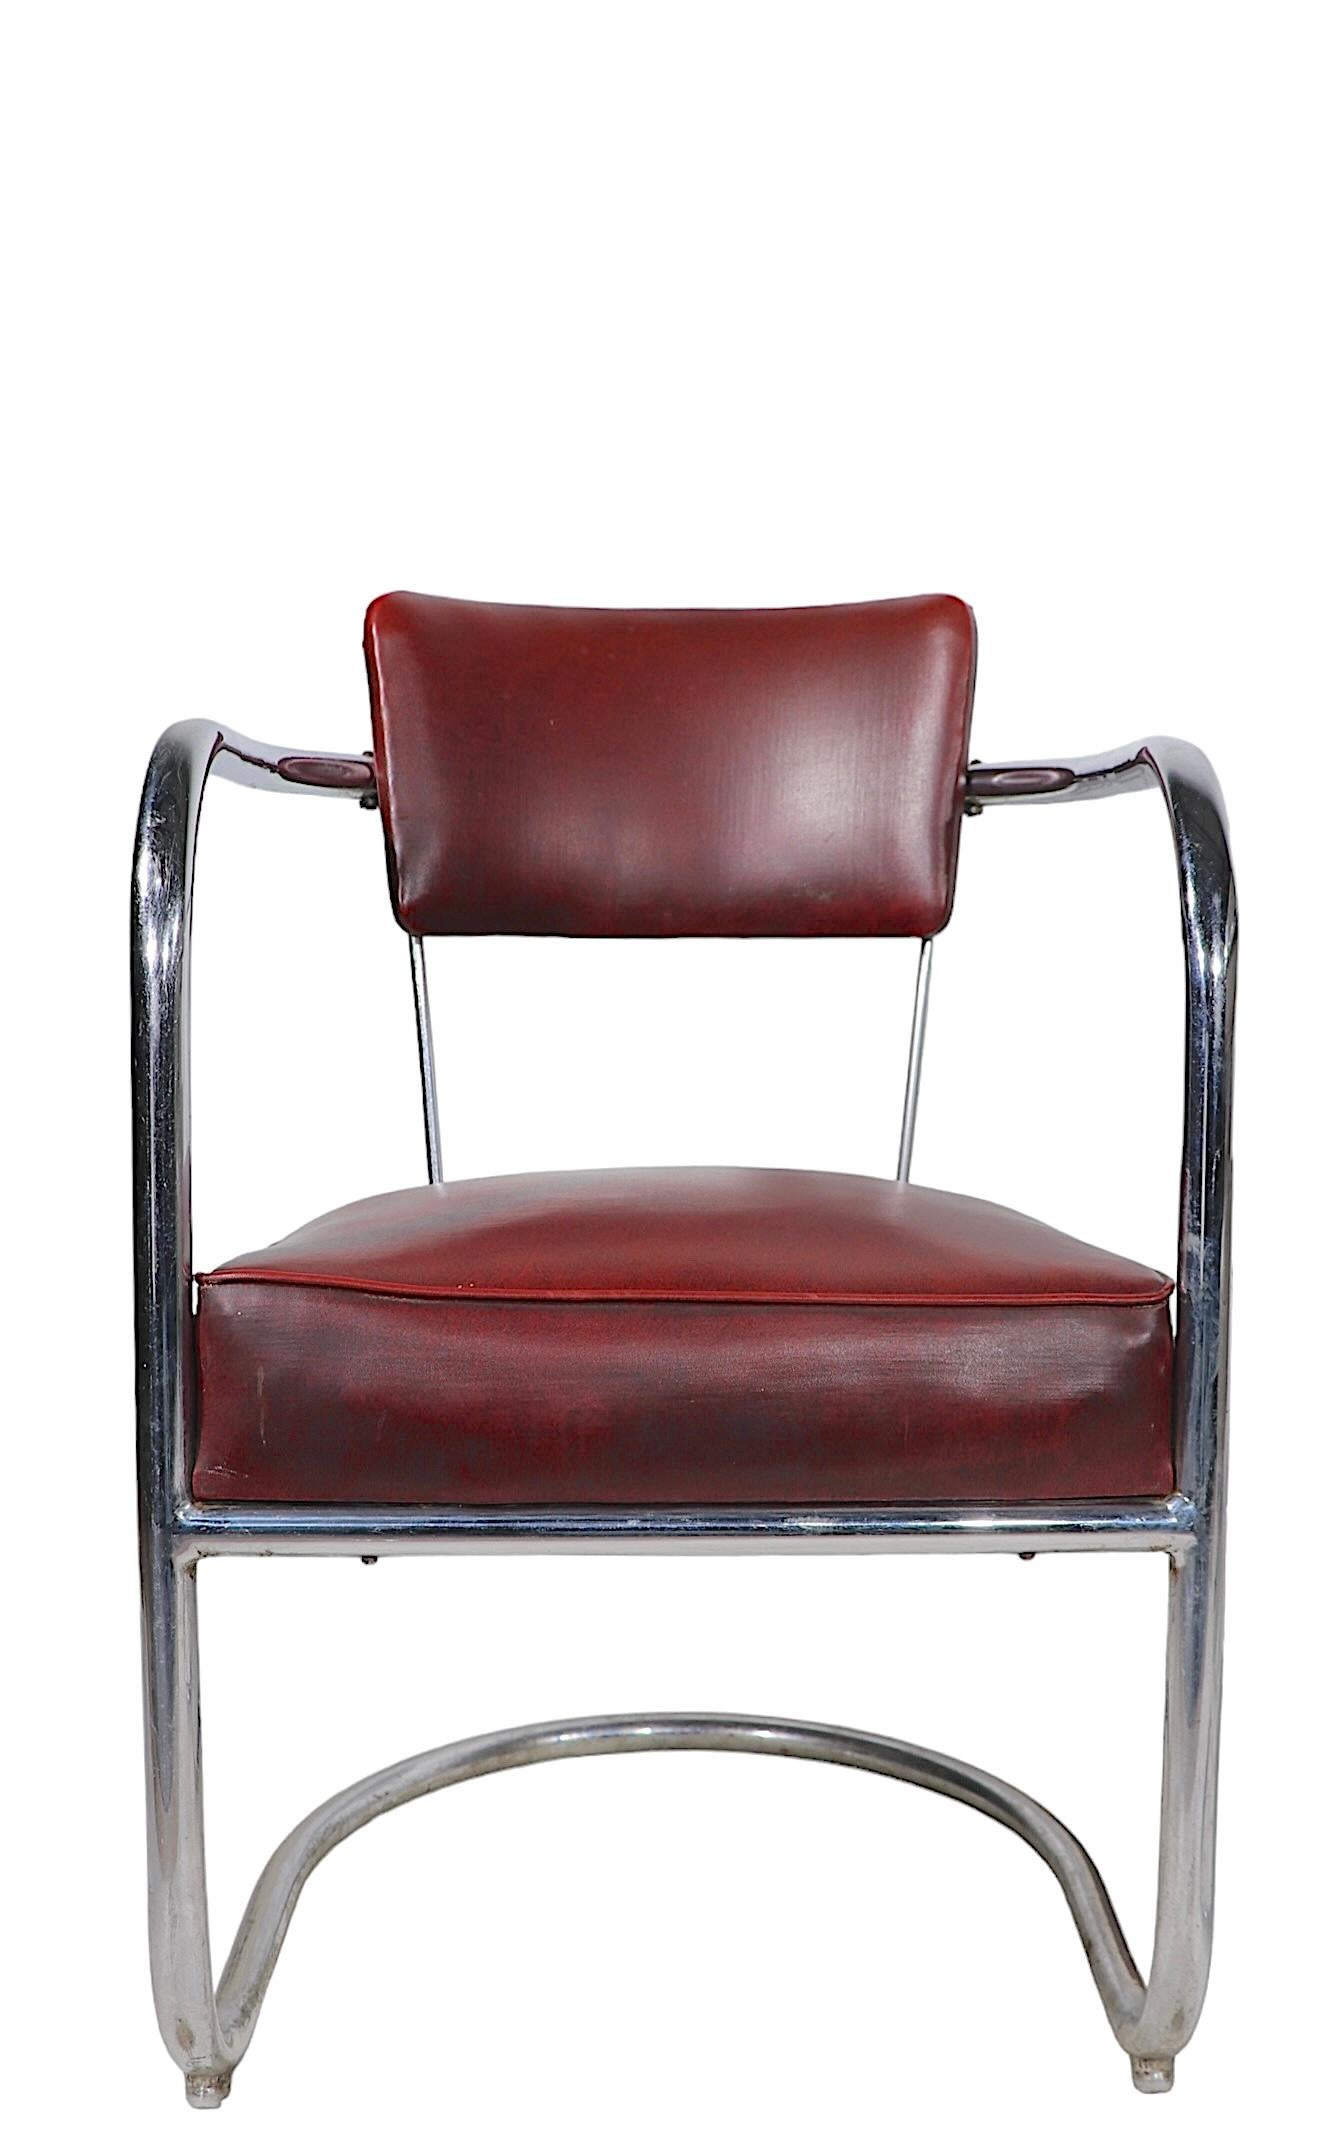 4 Chrome Art Deco Arm Chairs by Lloyd Furniture att. to Kem Weber c.1930's For Sale 2